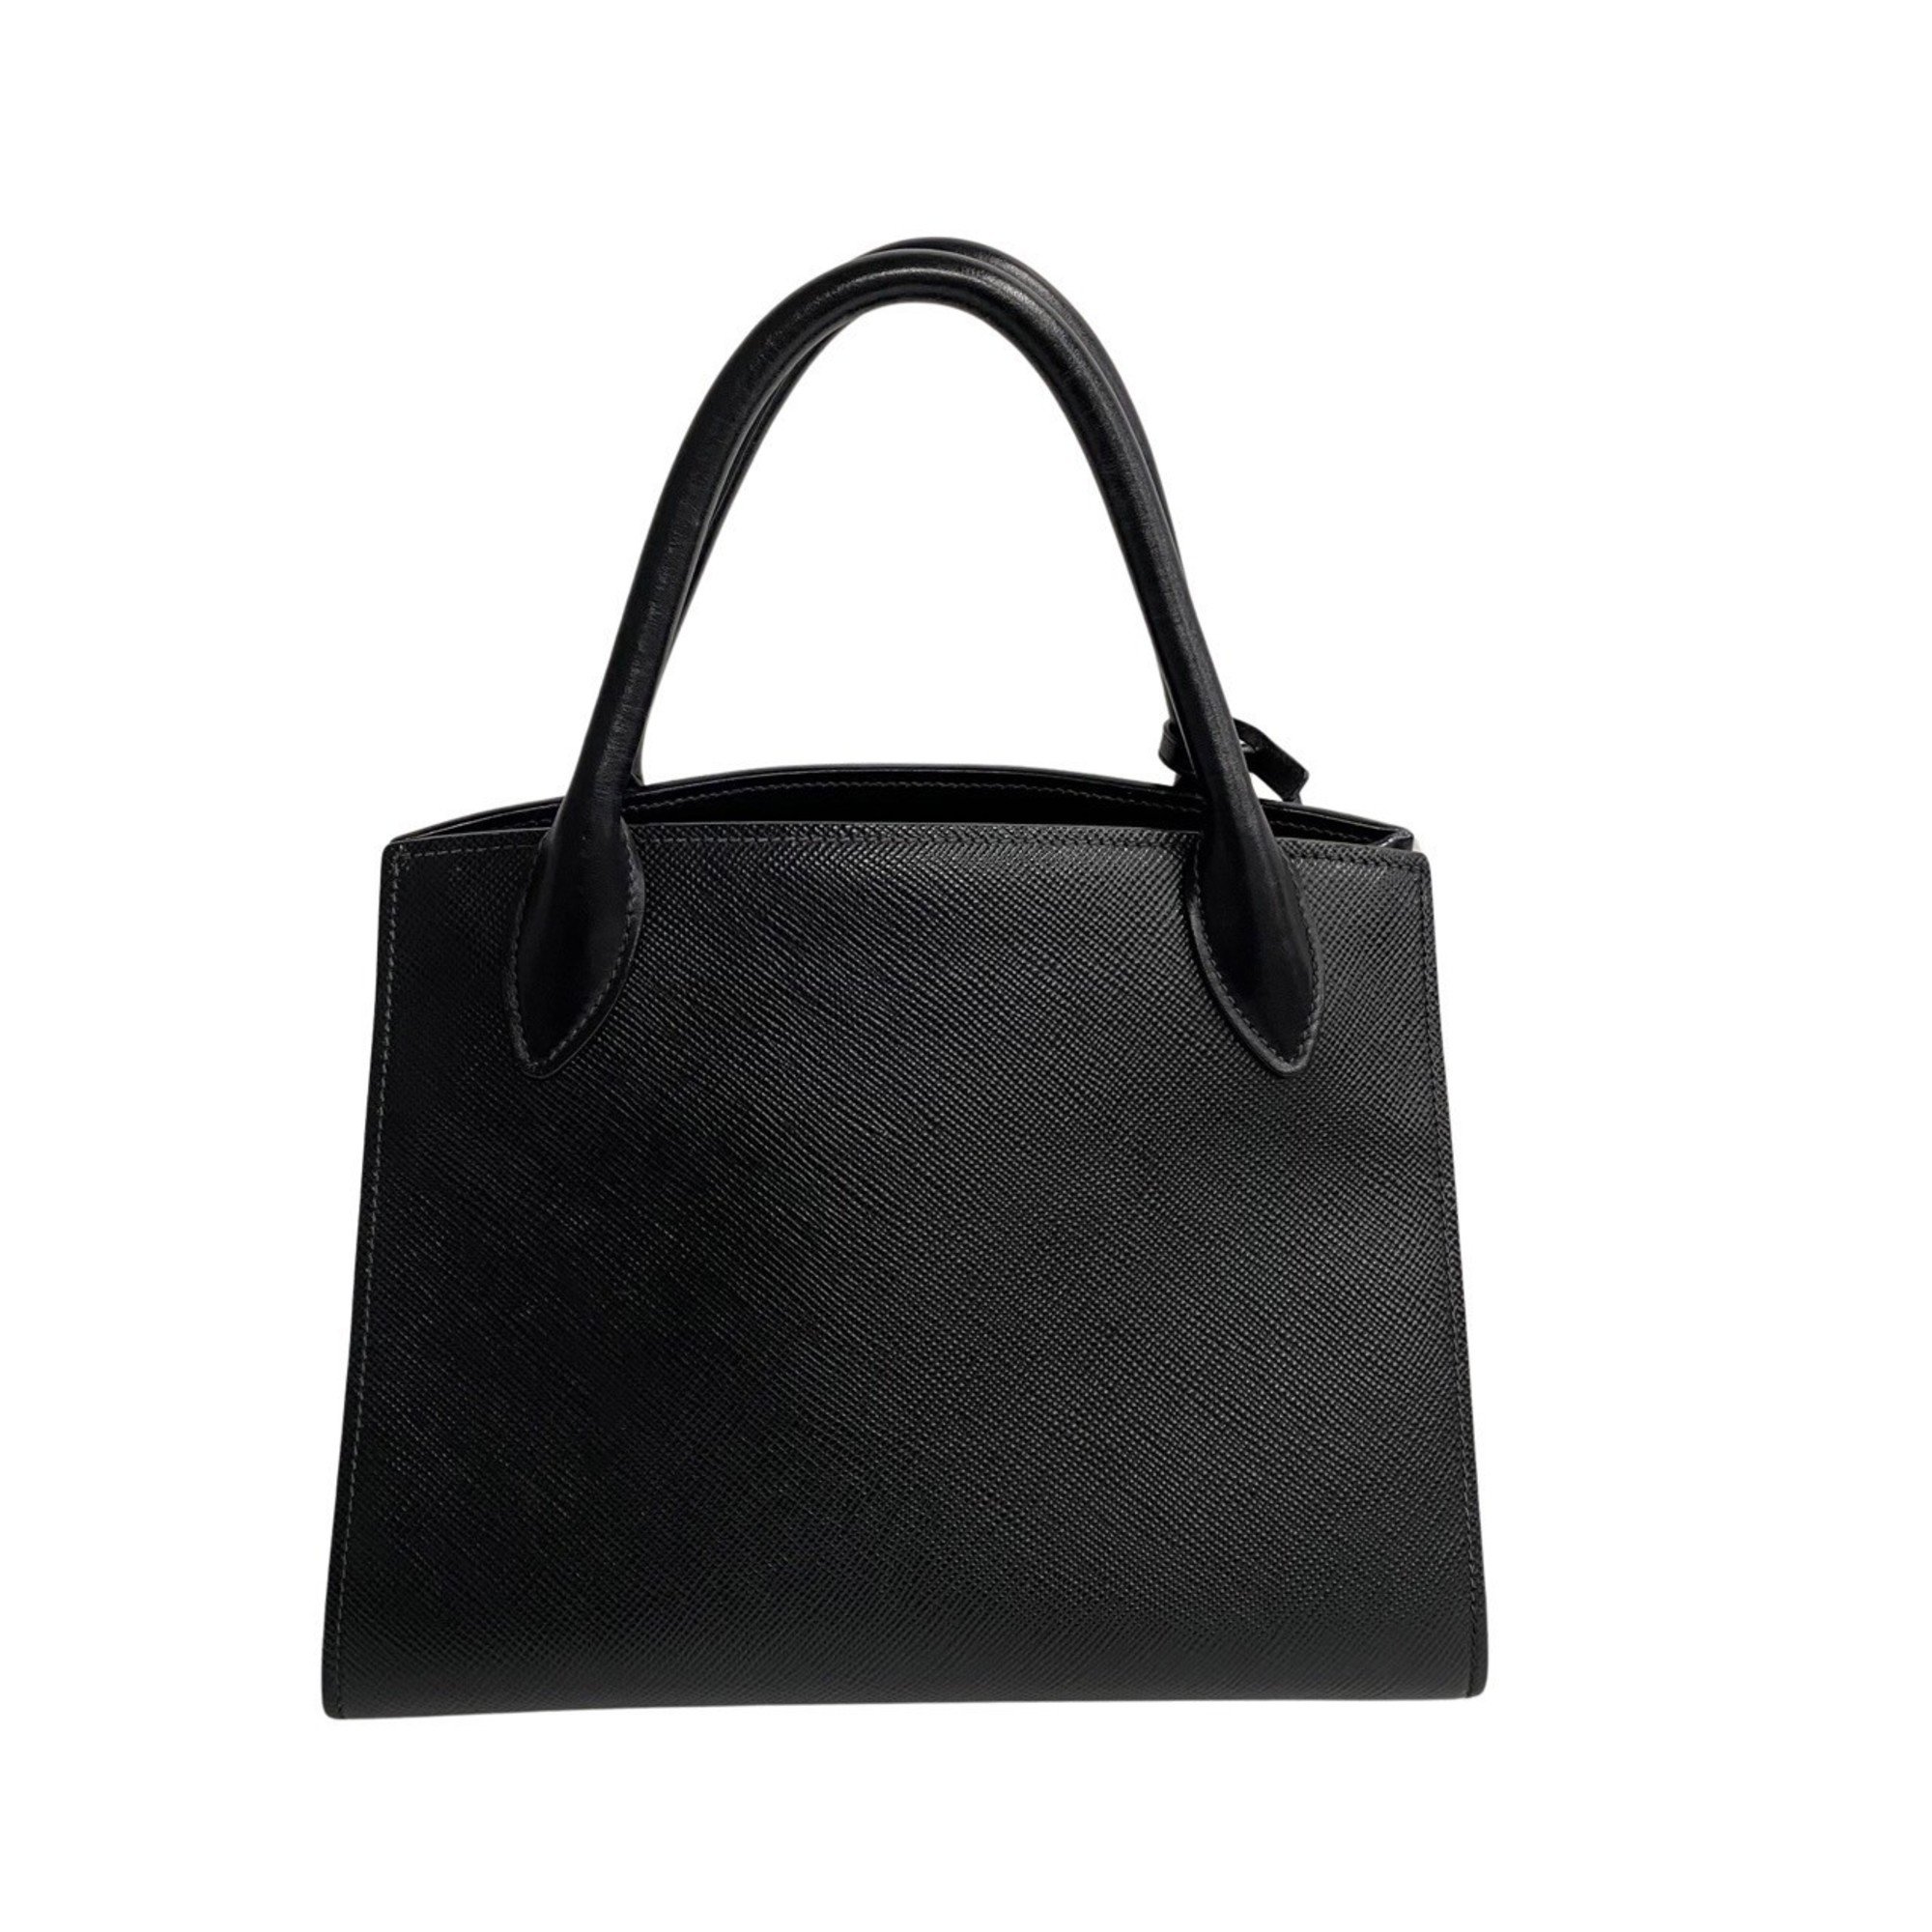 PRADA Monochrome Saffiano Leather 2way Handbag Shoulder Bag Tote Black 36927